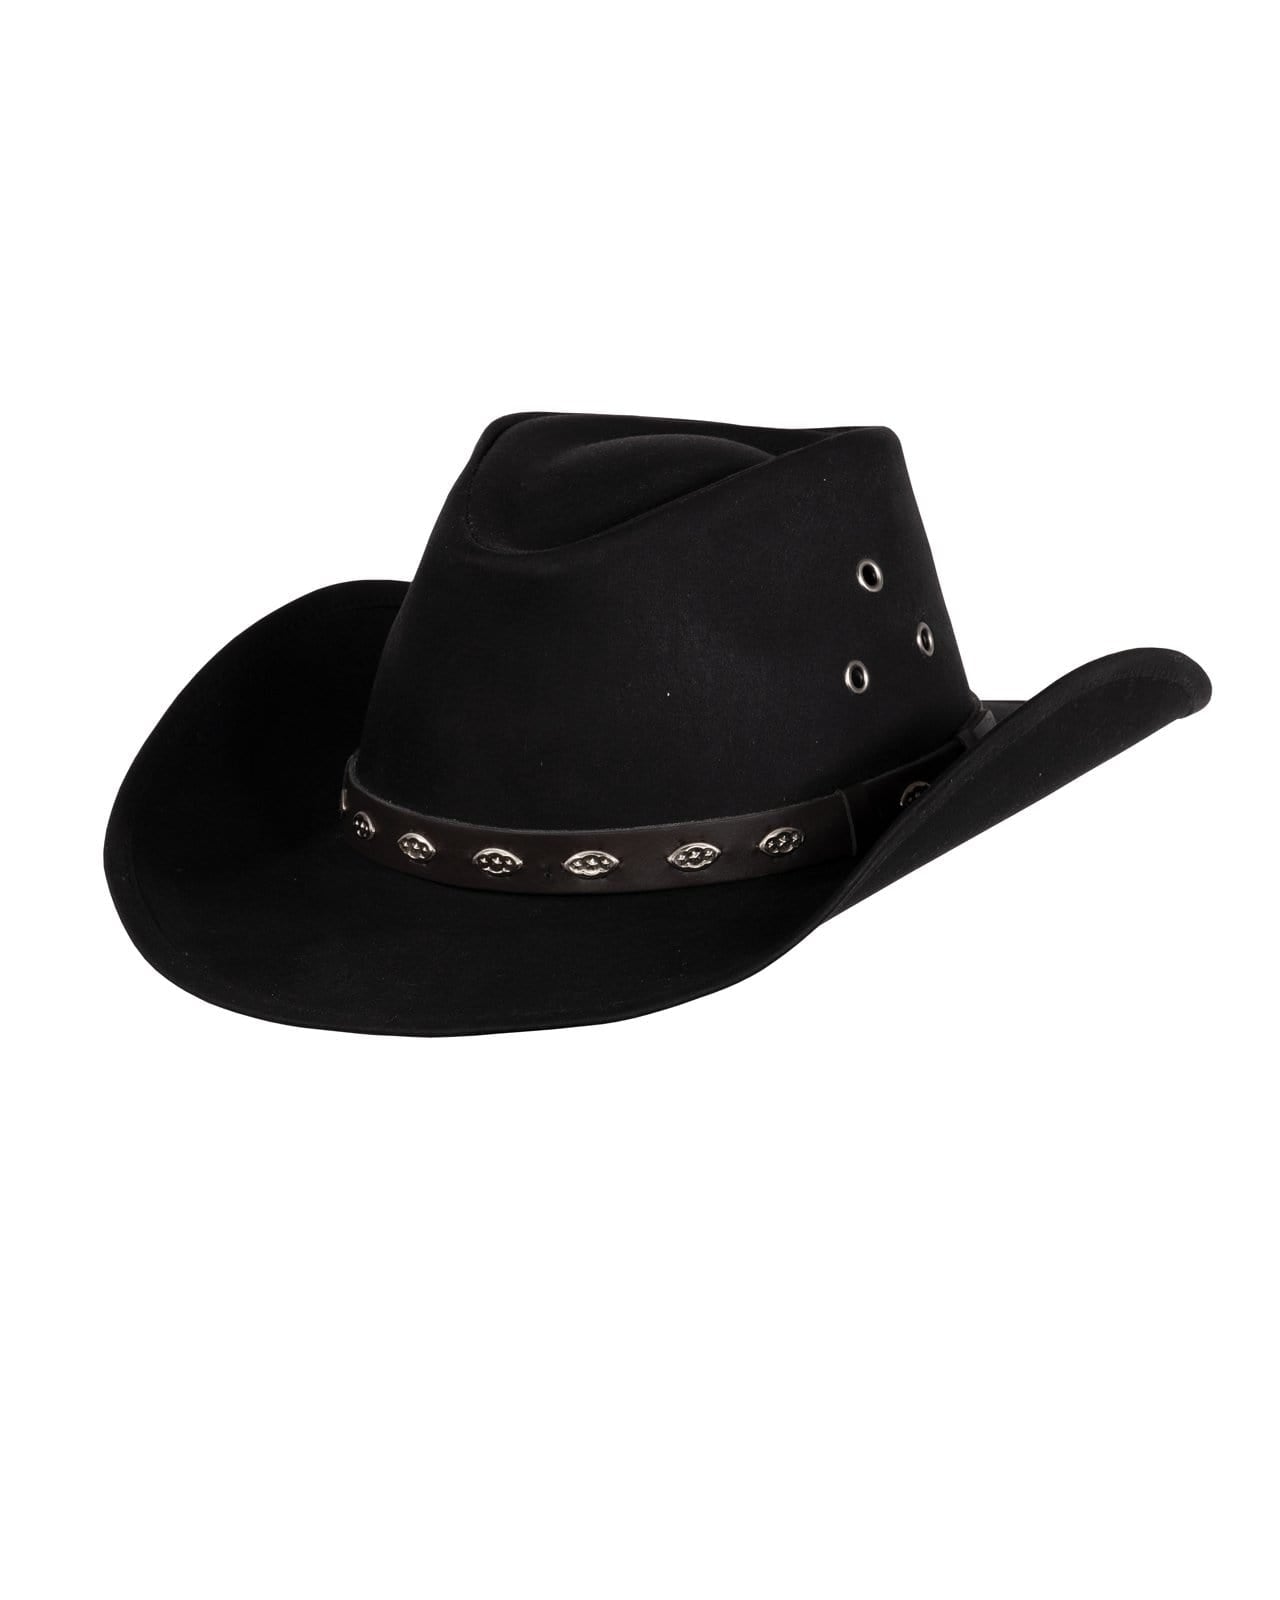 Outback Trading Company Badlands Black / S 14716-BLK-SM 089043776950 Hats